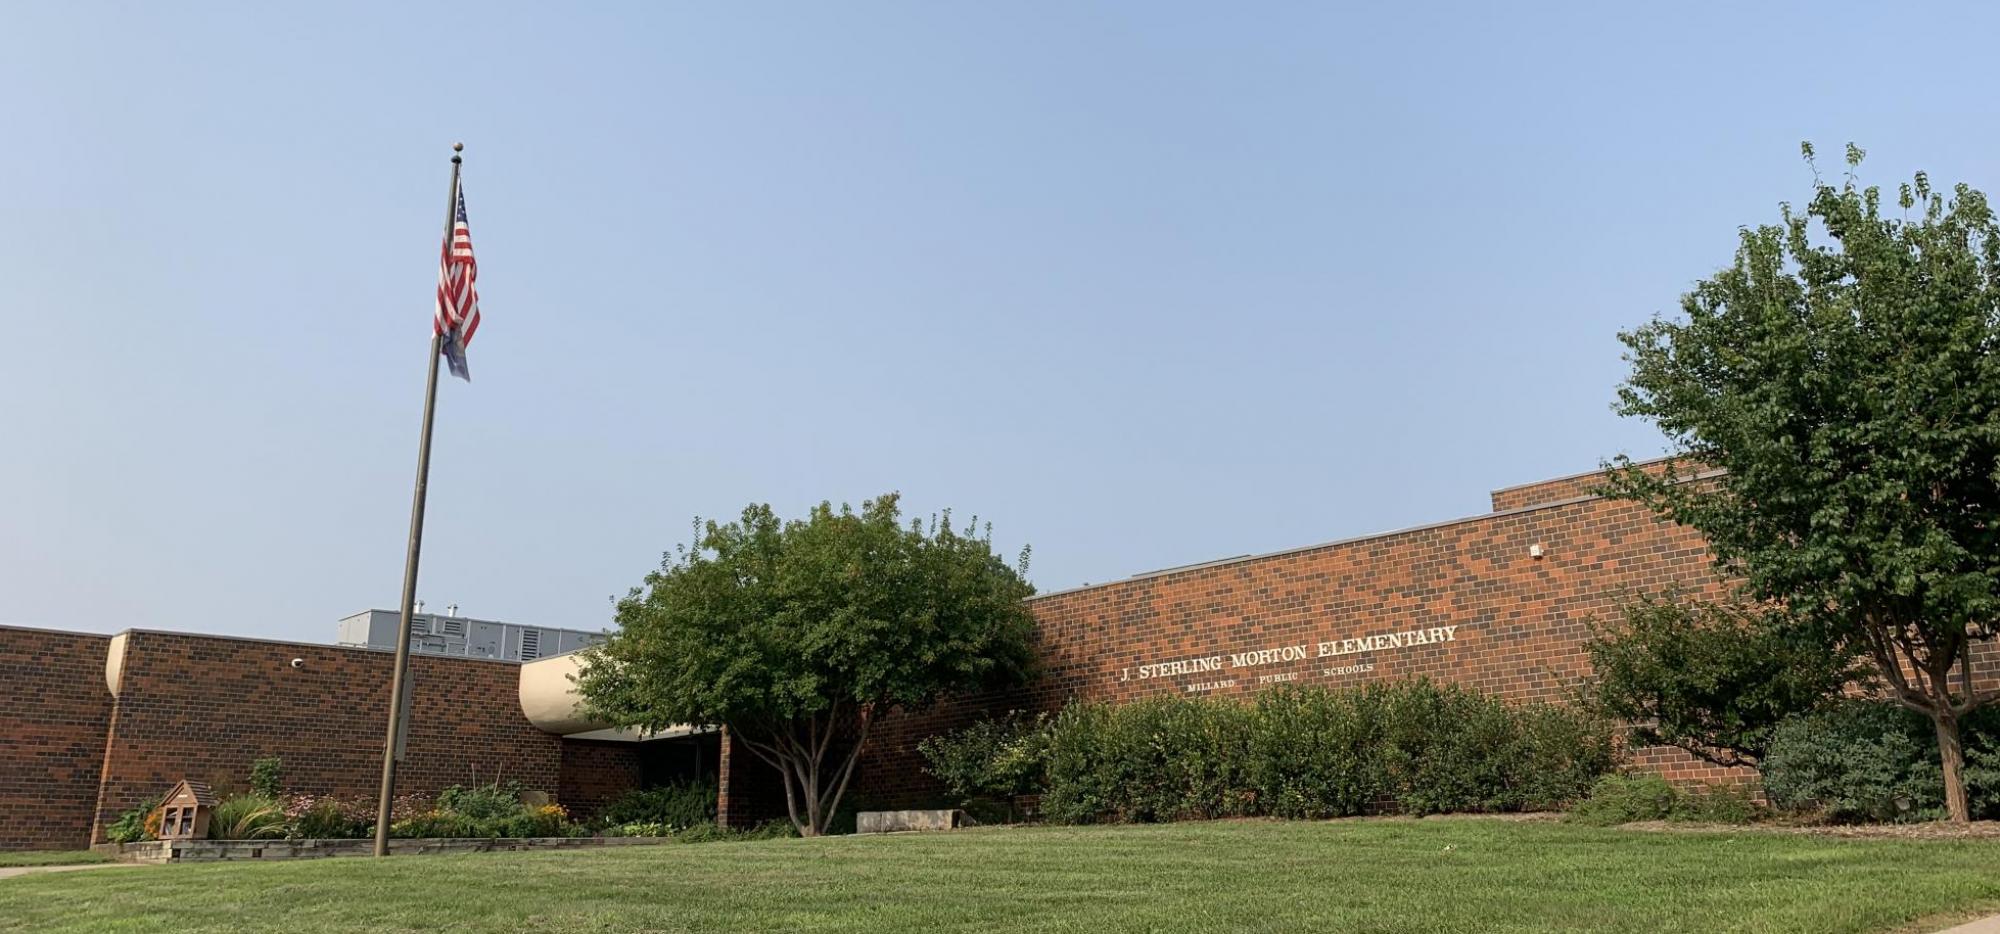 Morton Elementary School Millard Public Schools